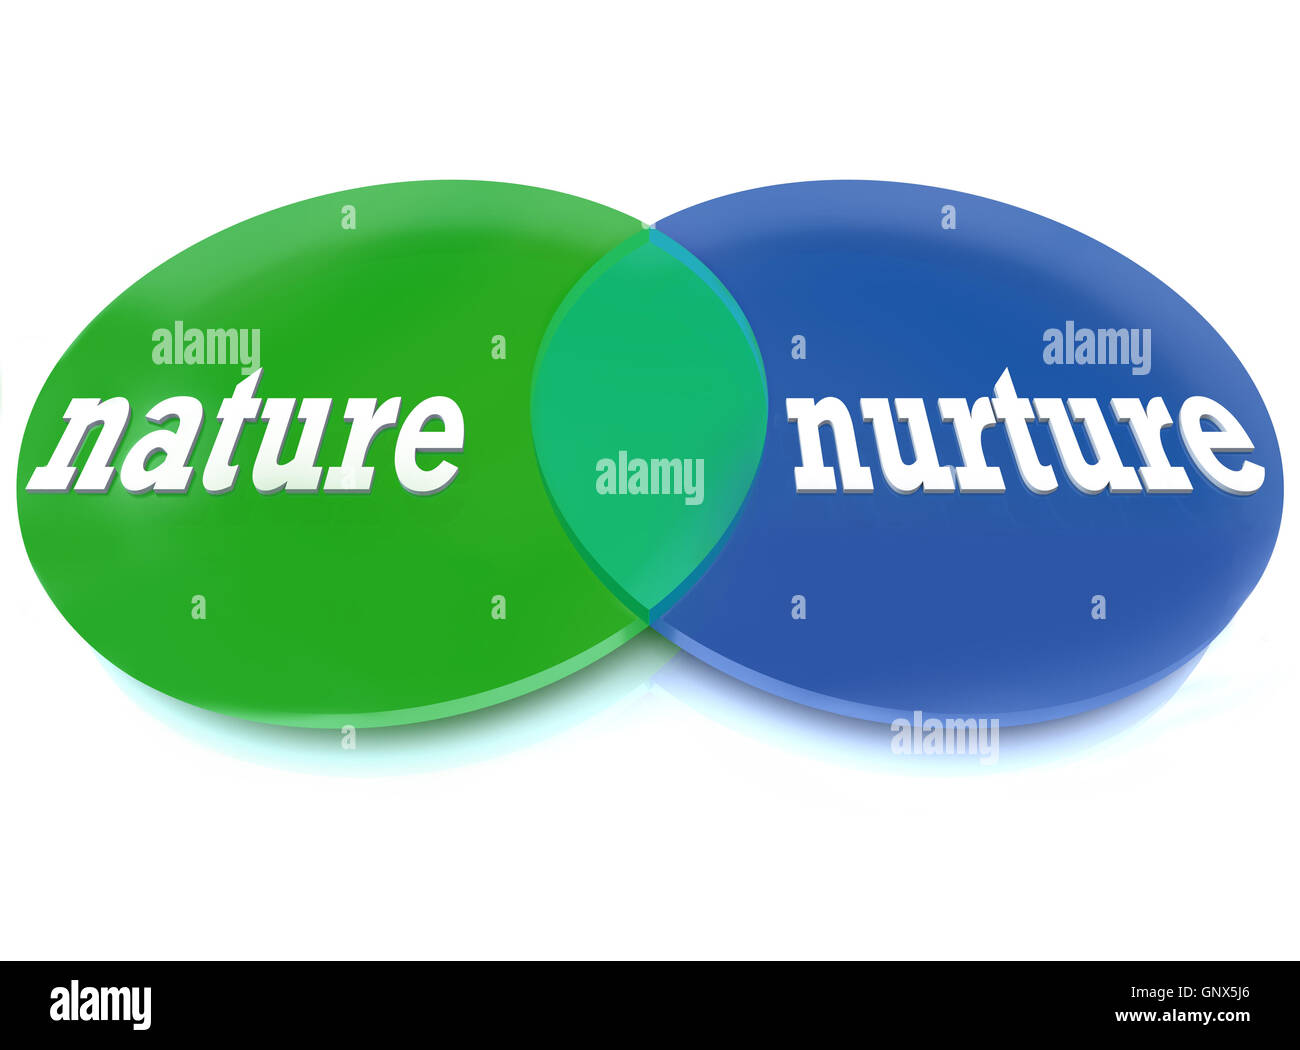 Nature vs nurture venn diagram